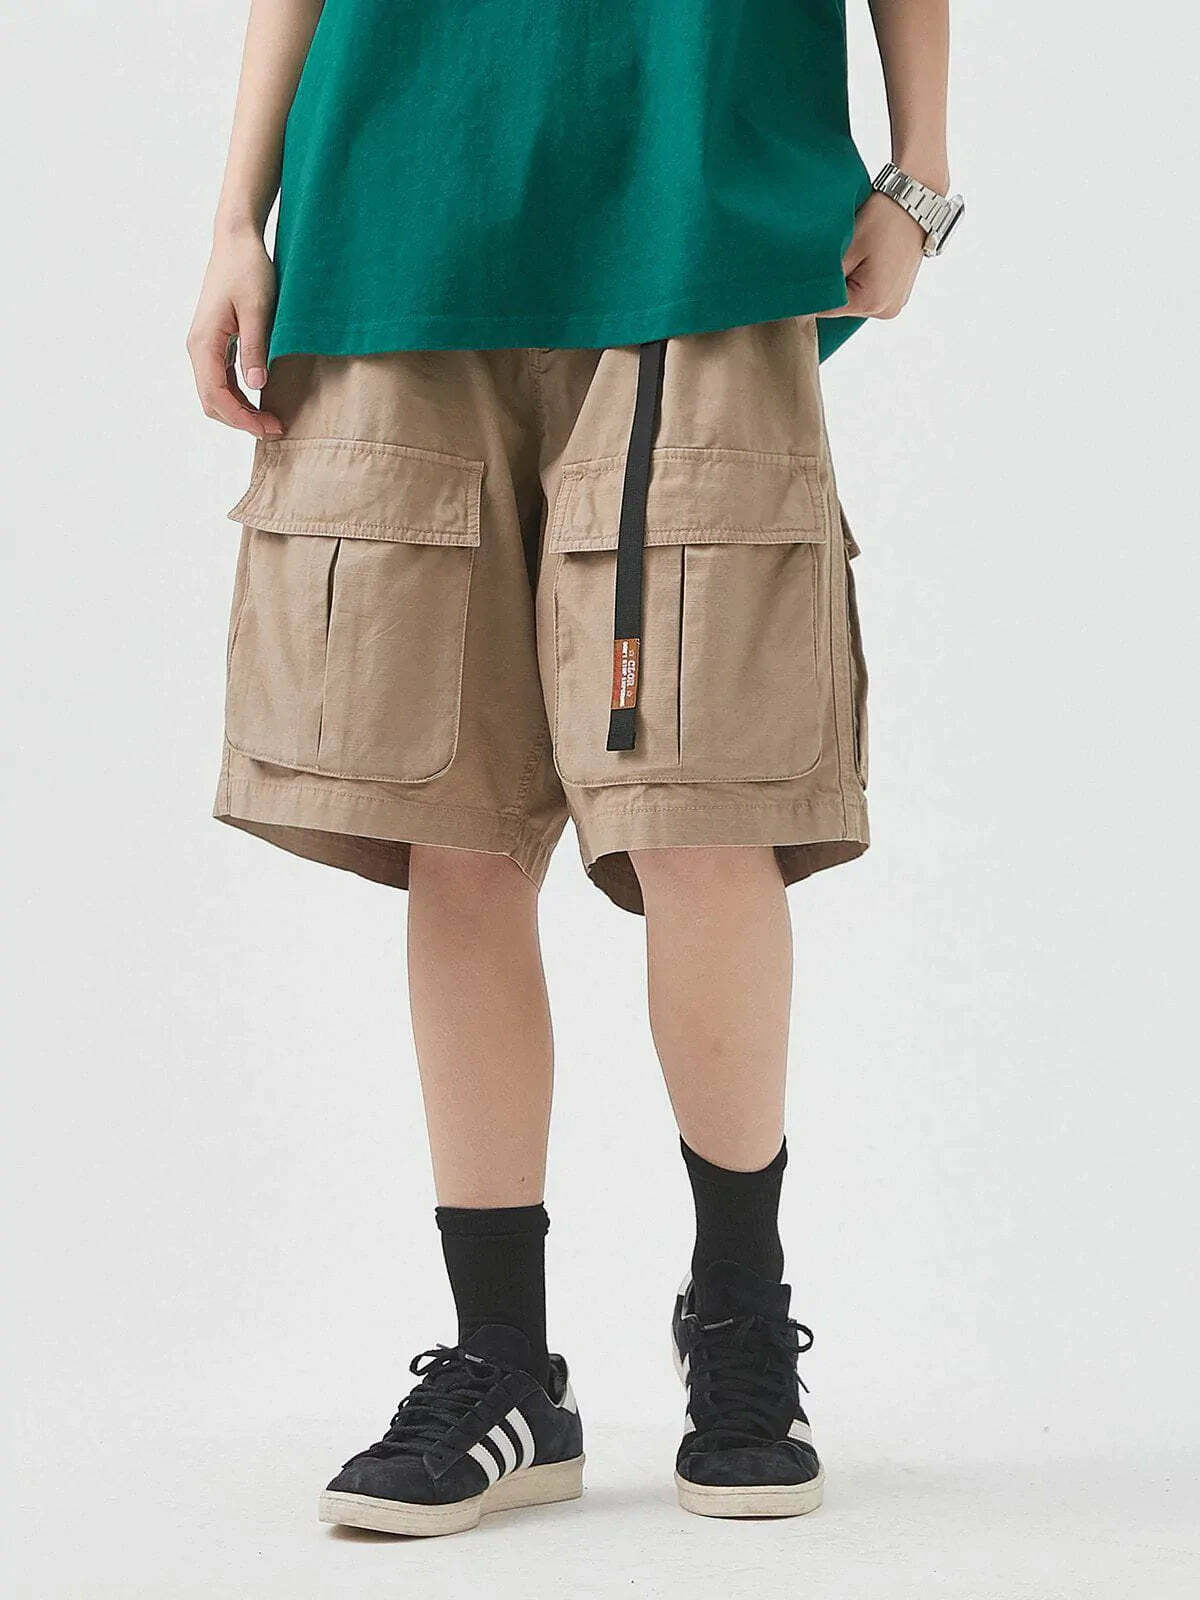 retro multipocket shorts functional & stylish streetwear 8649